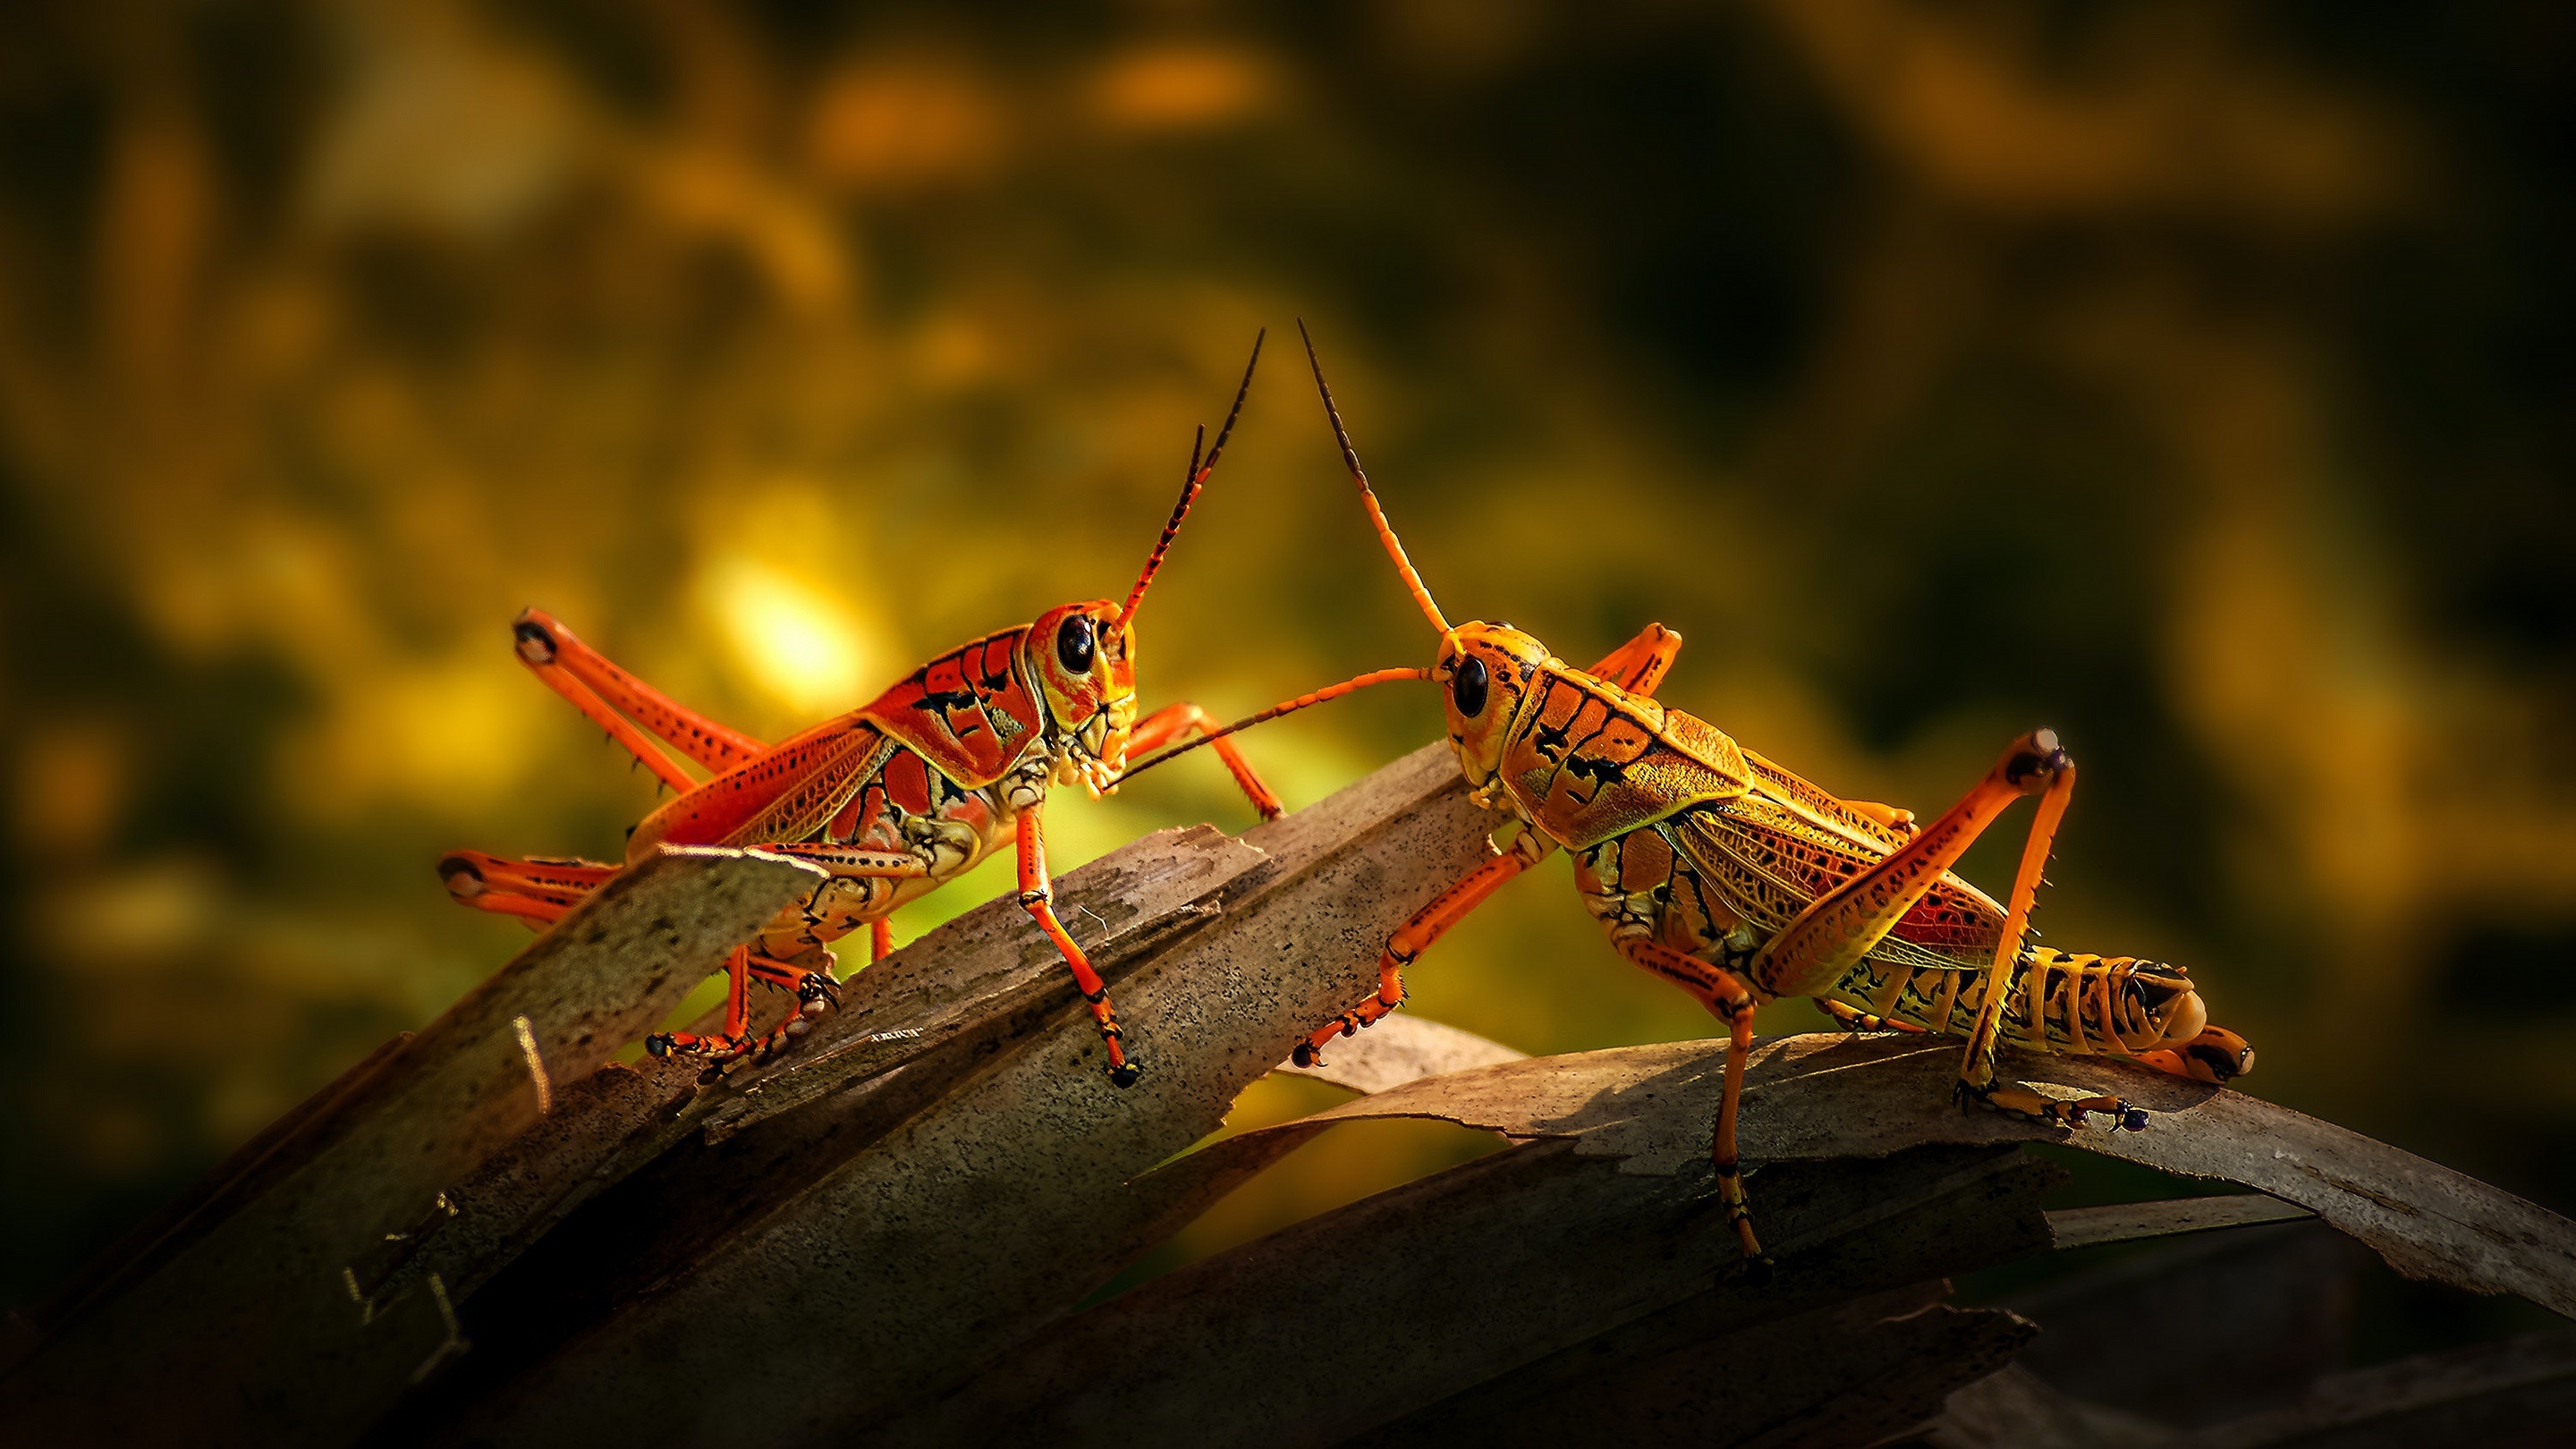 Grasshopper macro, Green insect, Jumping legs, Close-up details, 2880x1620 HD Desktop